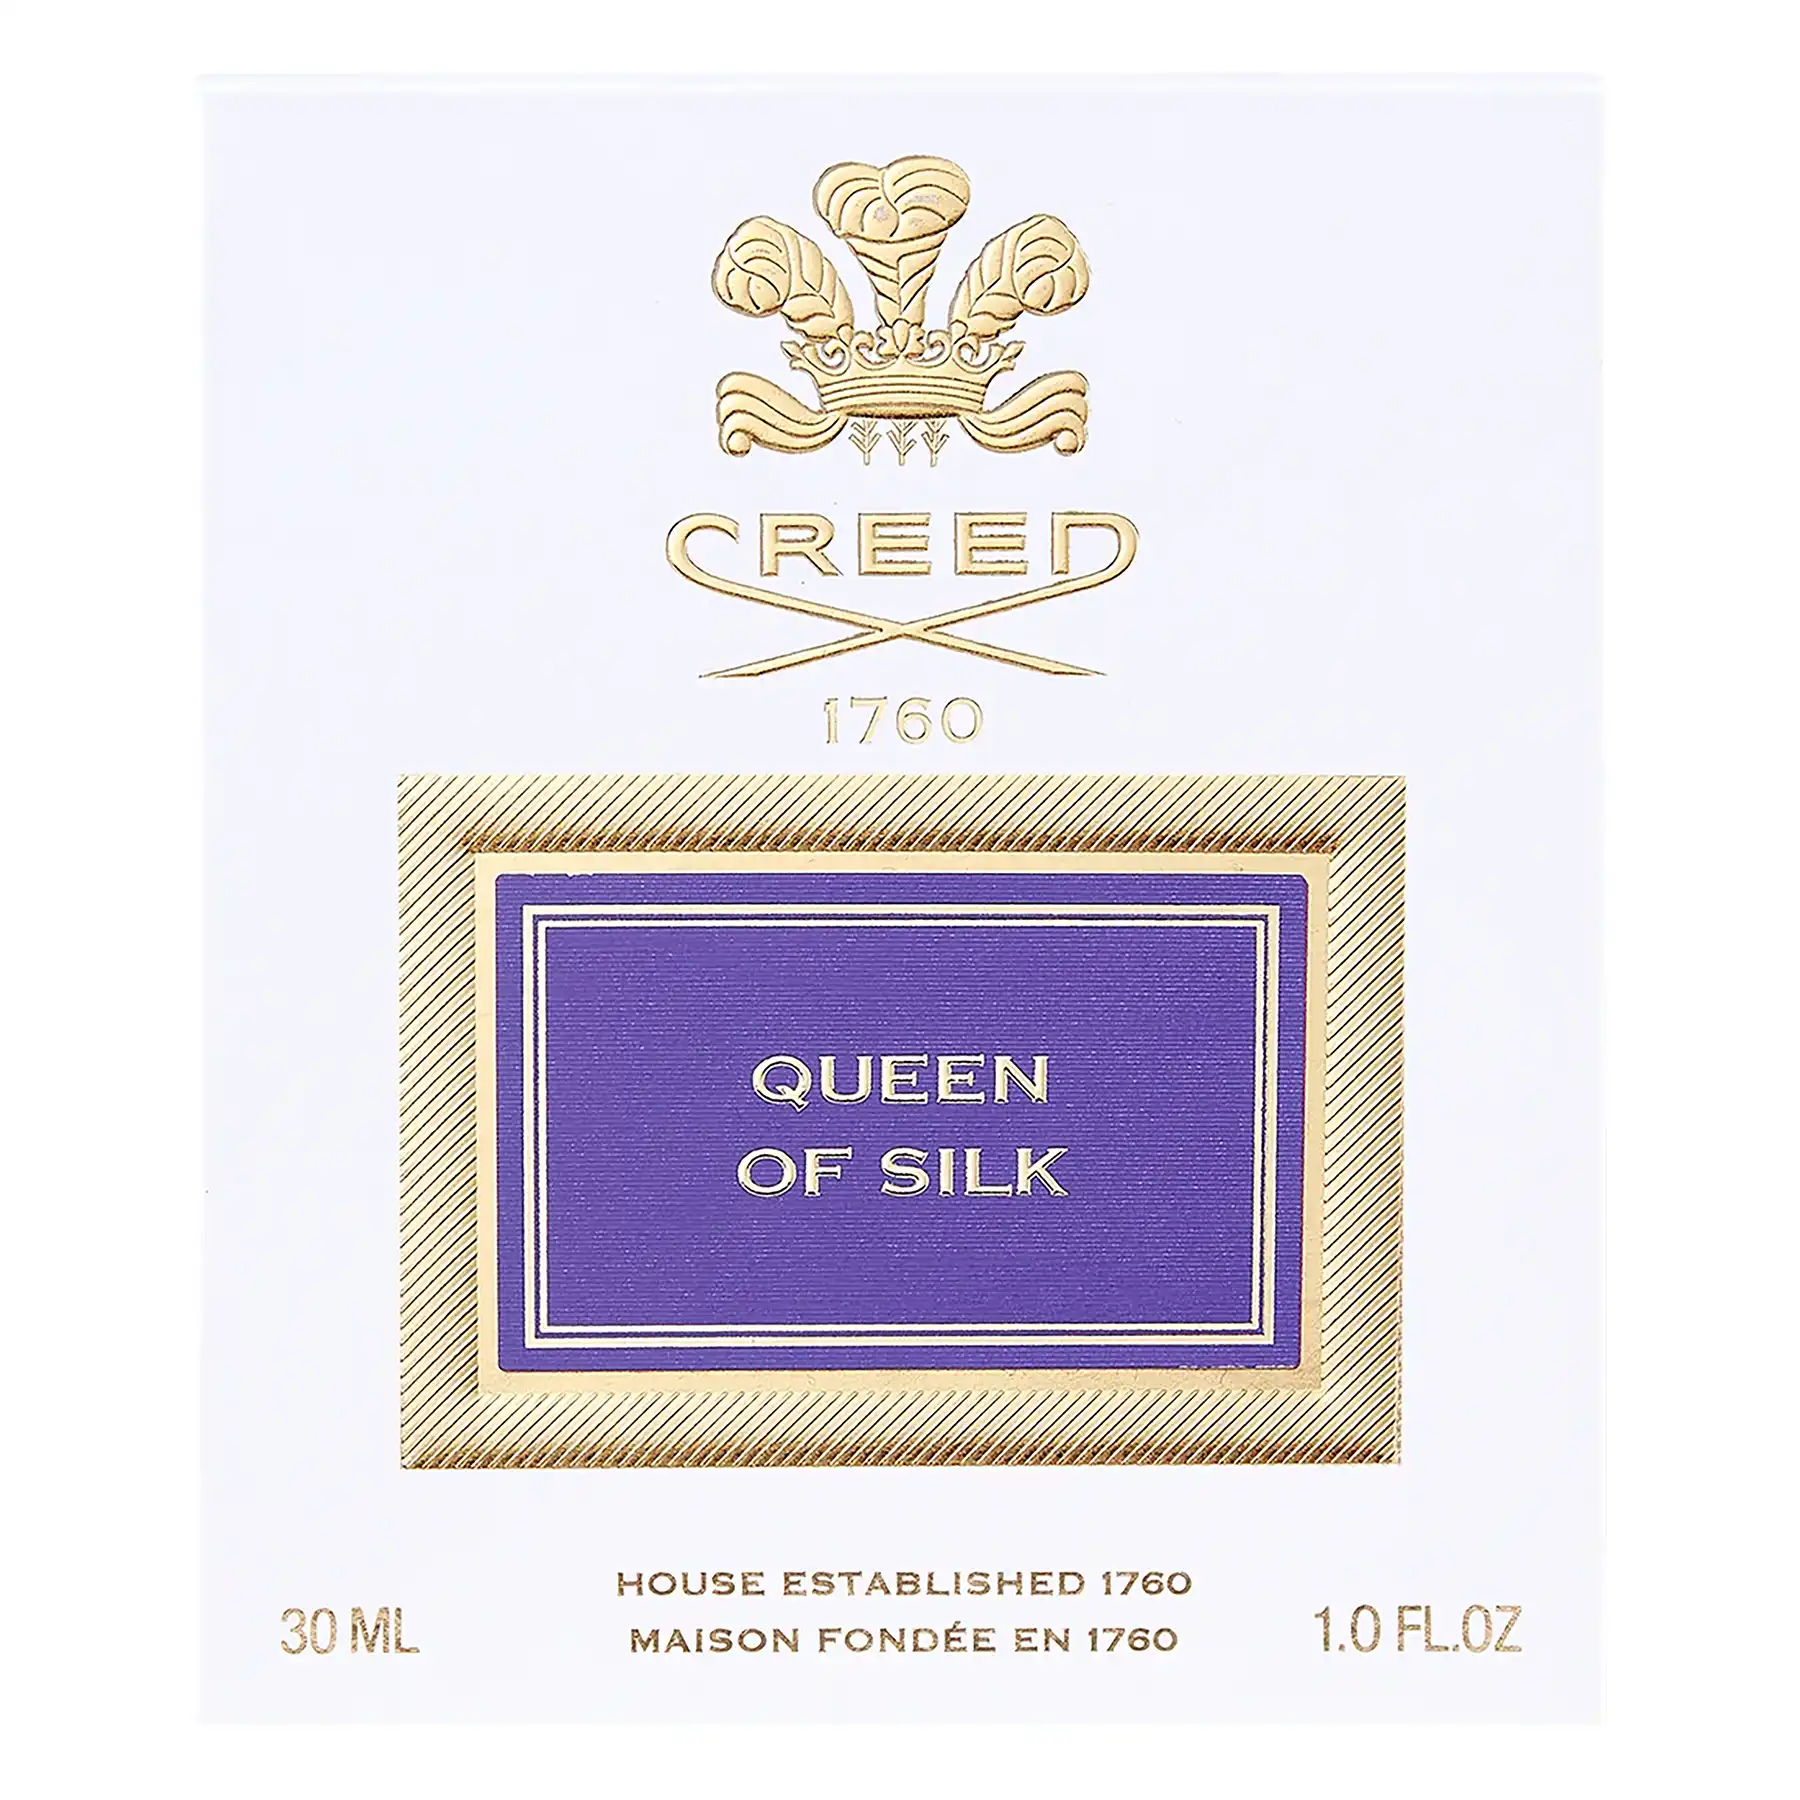 Creed Queen of Silk Eau de Parfum 30 ML